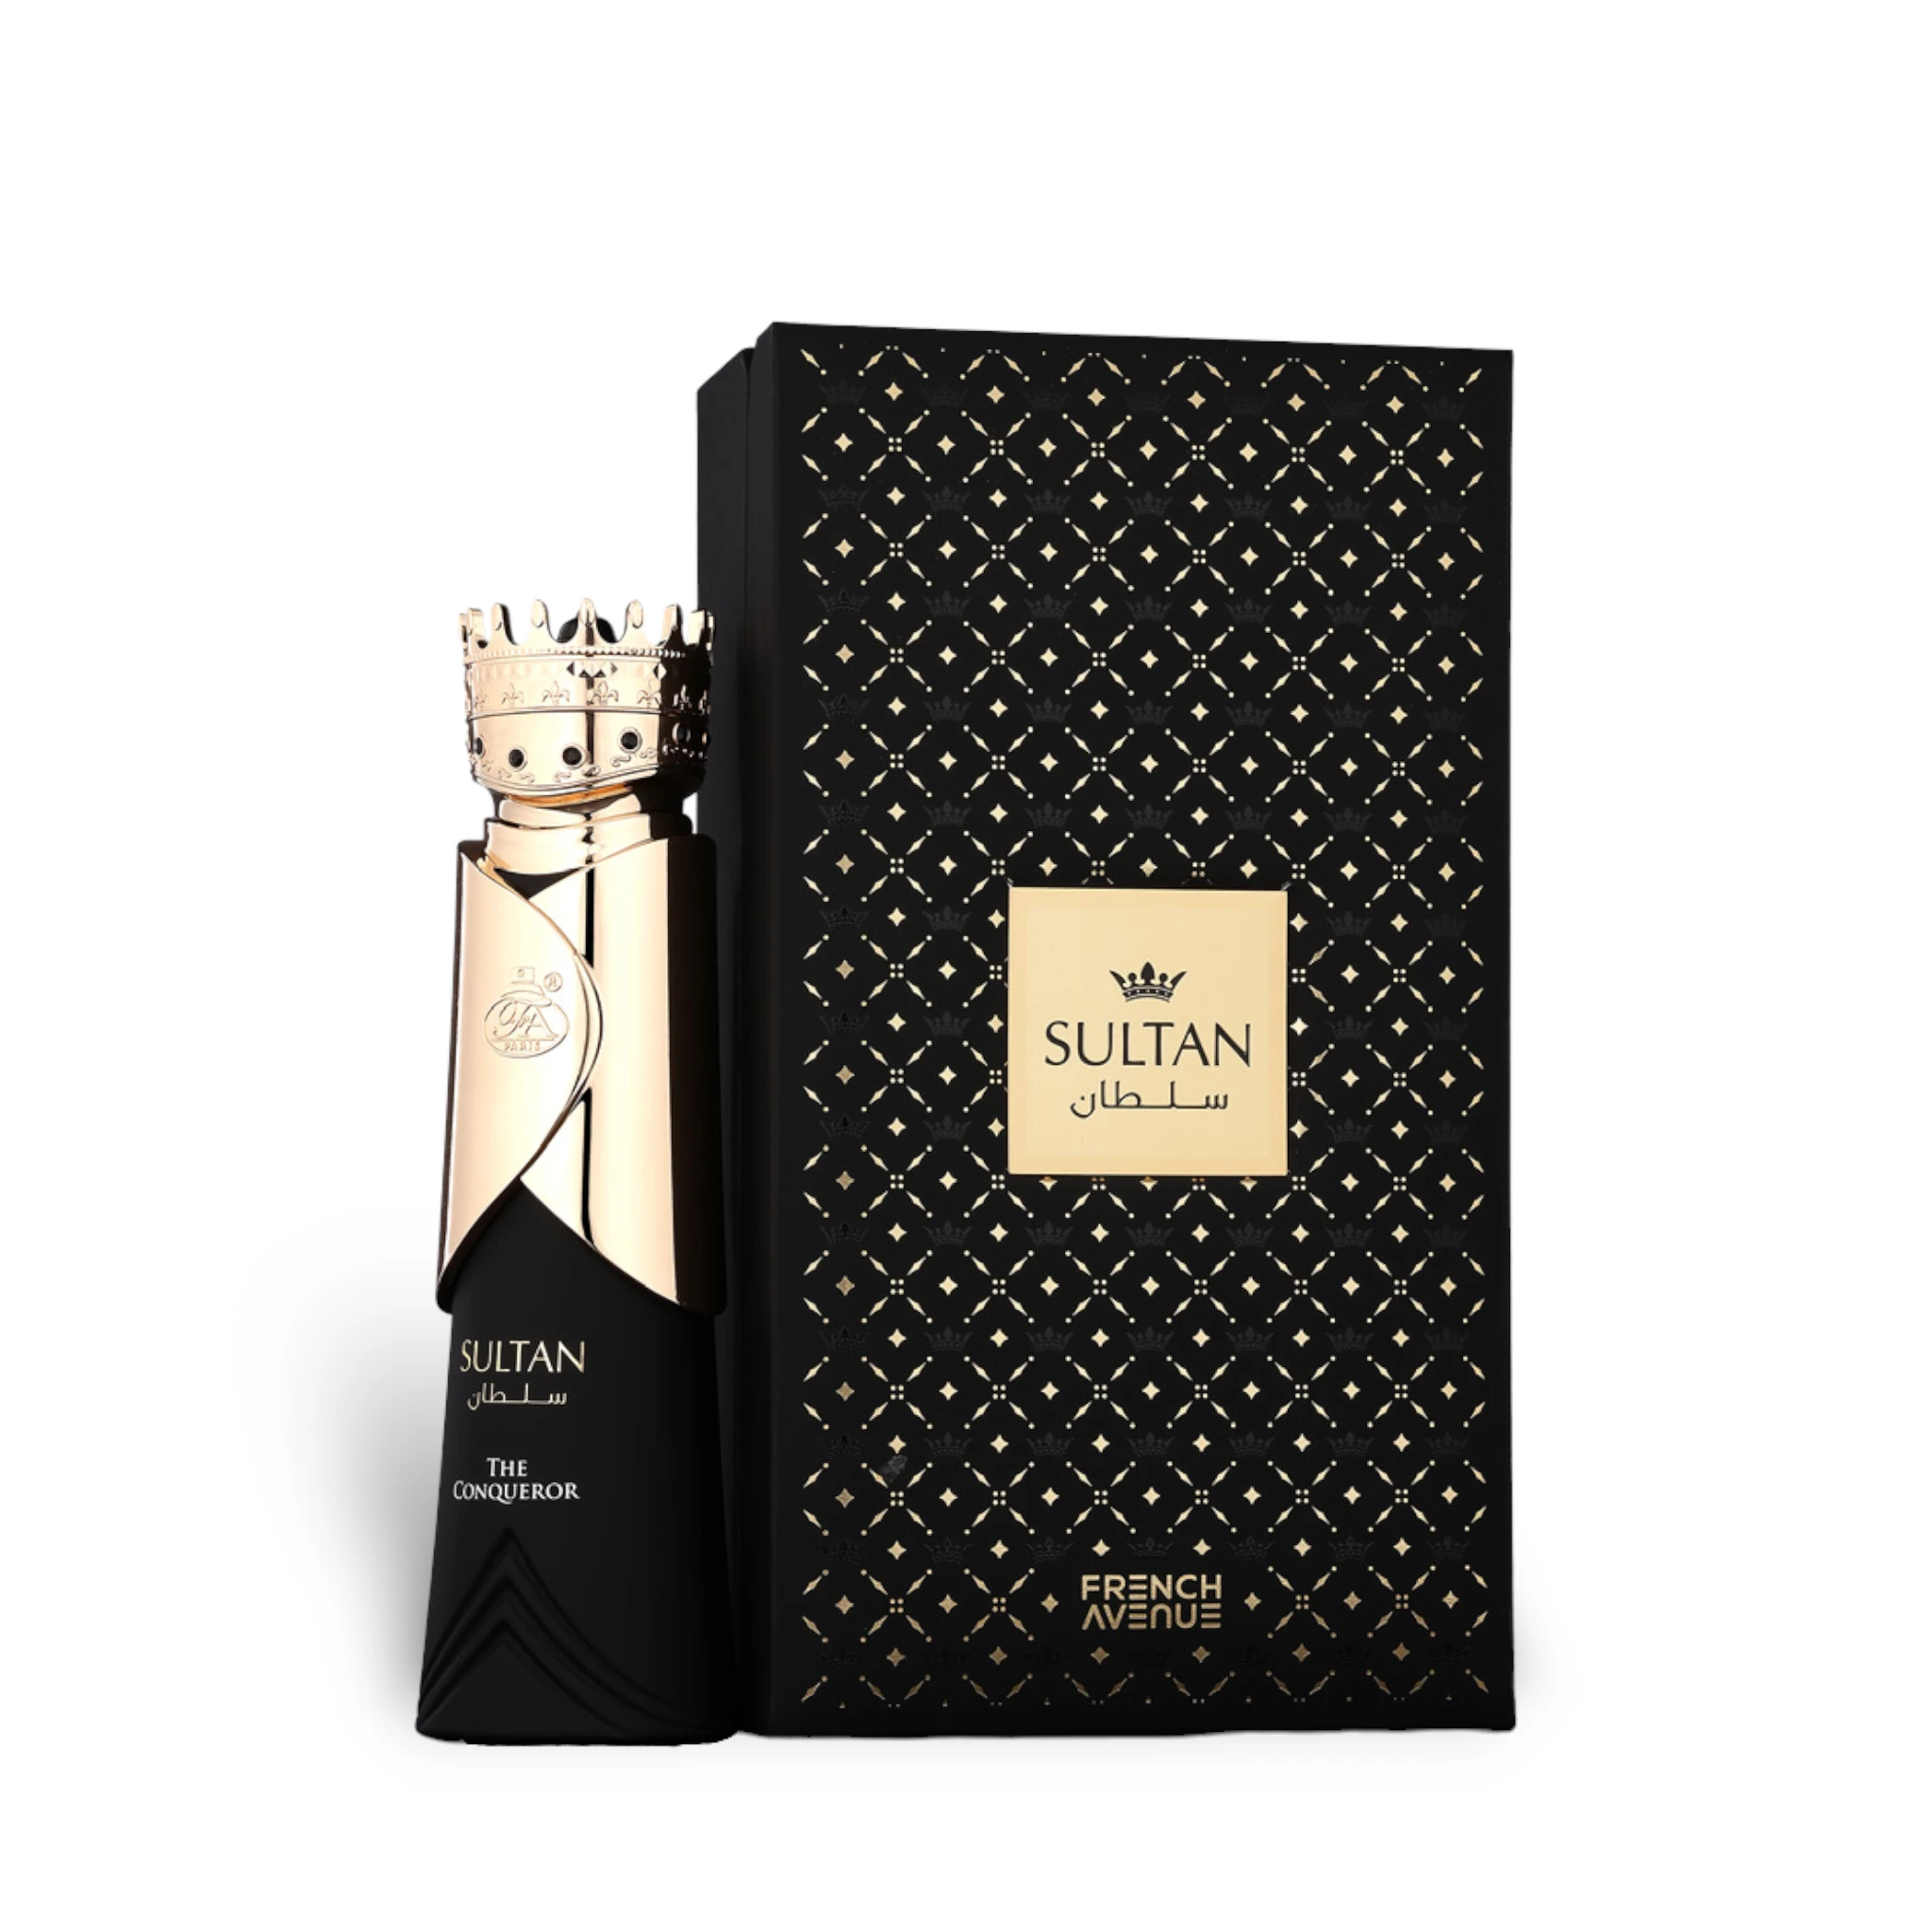 Sultan The Conqueror Perfume Eau De Parfum By Fa Paris French Avenue (Fragrance World)